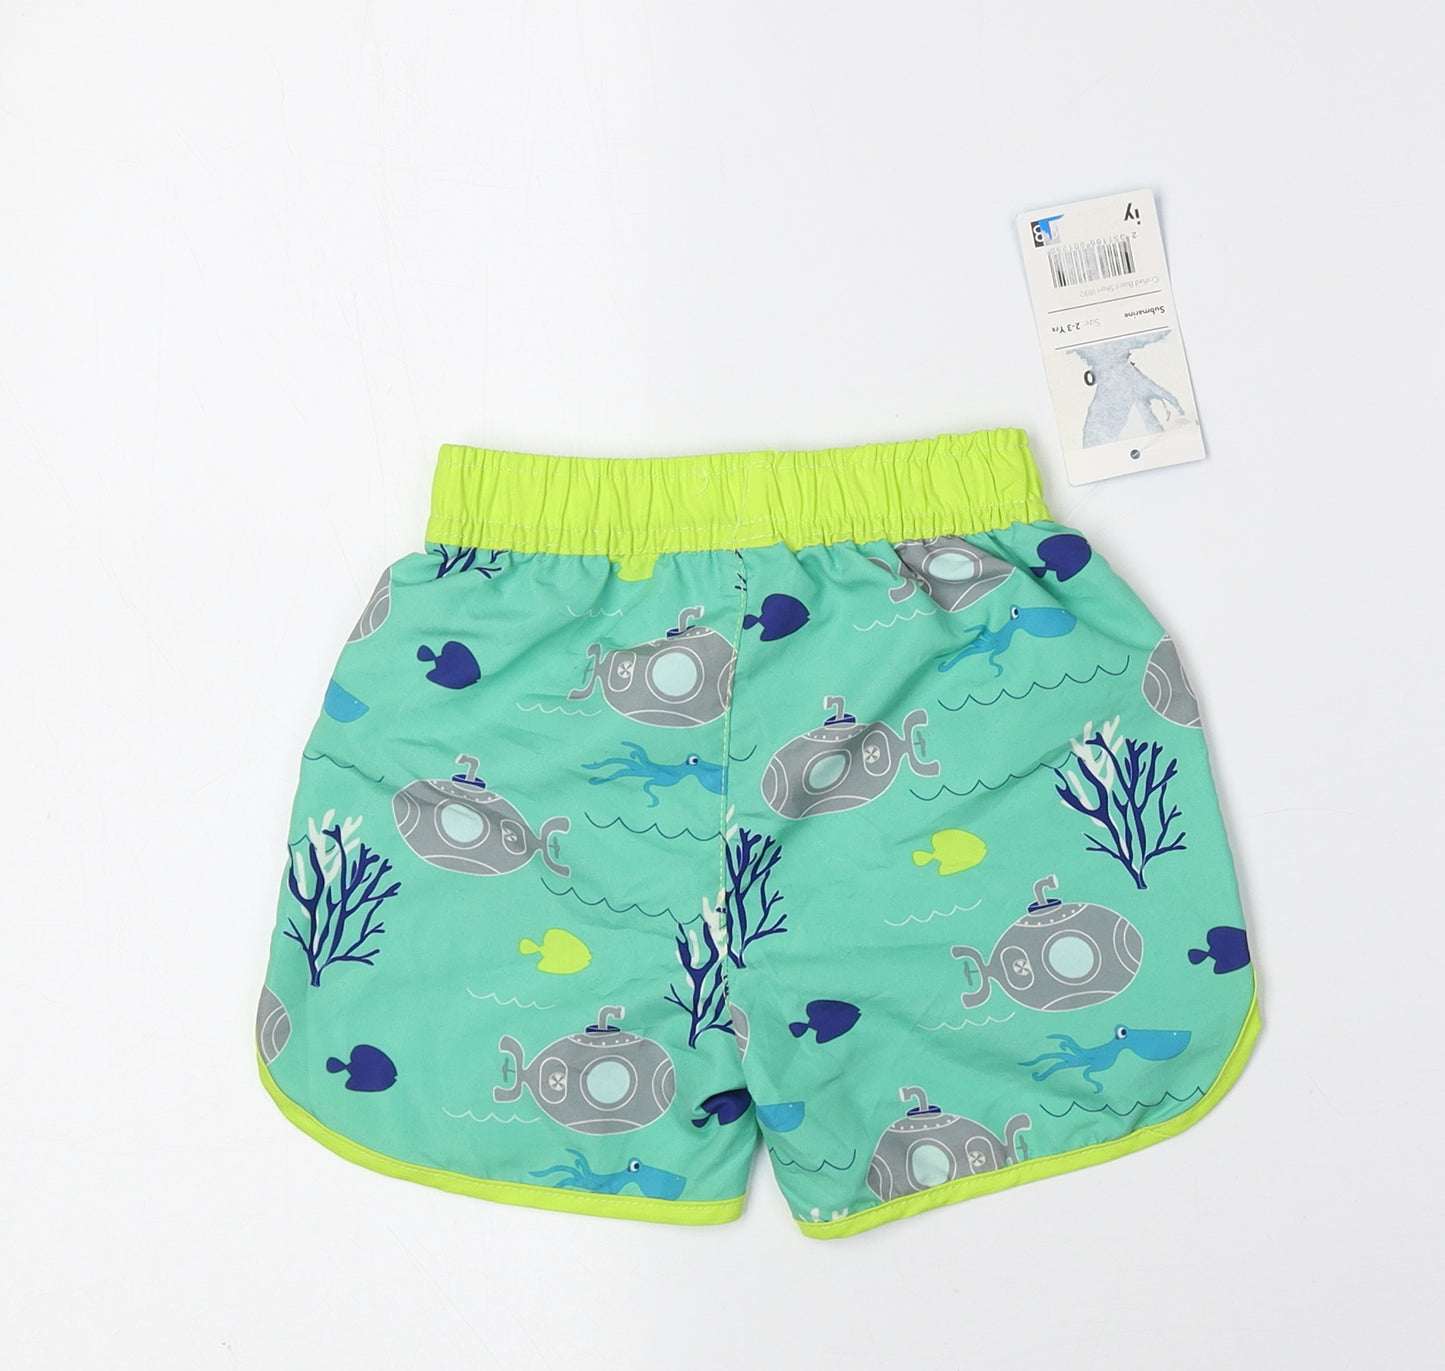 Crafted Boys Multicoloured Geometric Polyester Utility Shorts Size 2-3 Years Regular - Swim Trunks Submarine